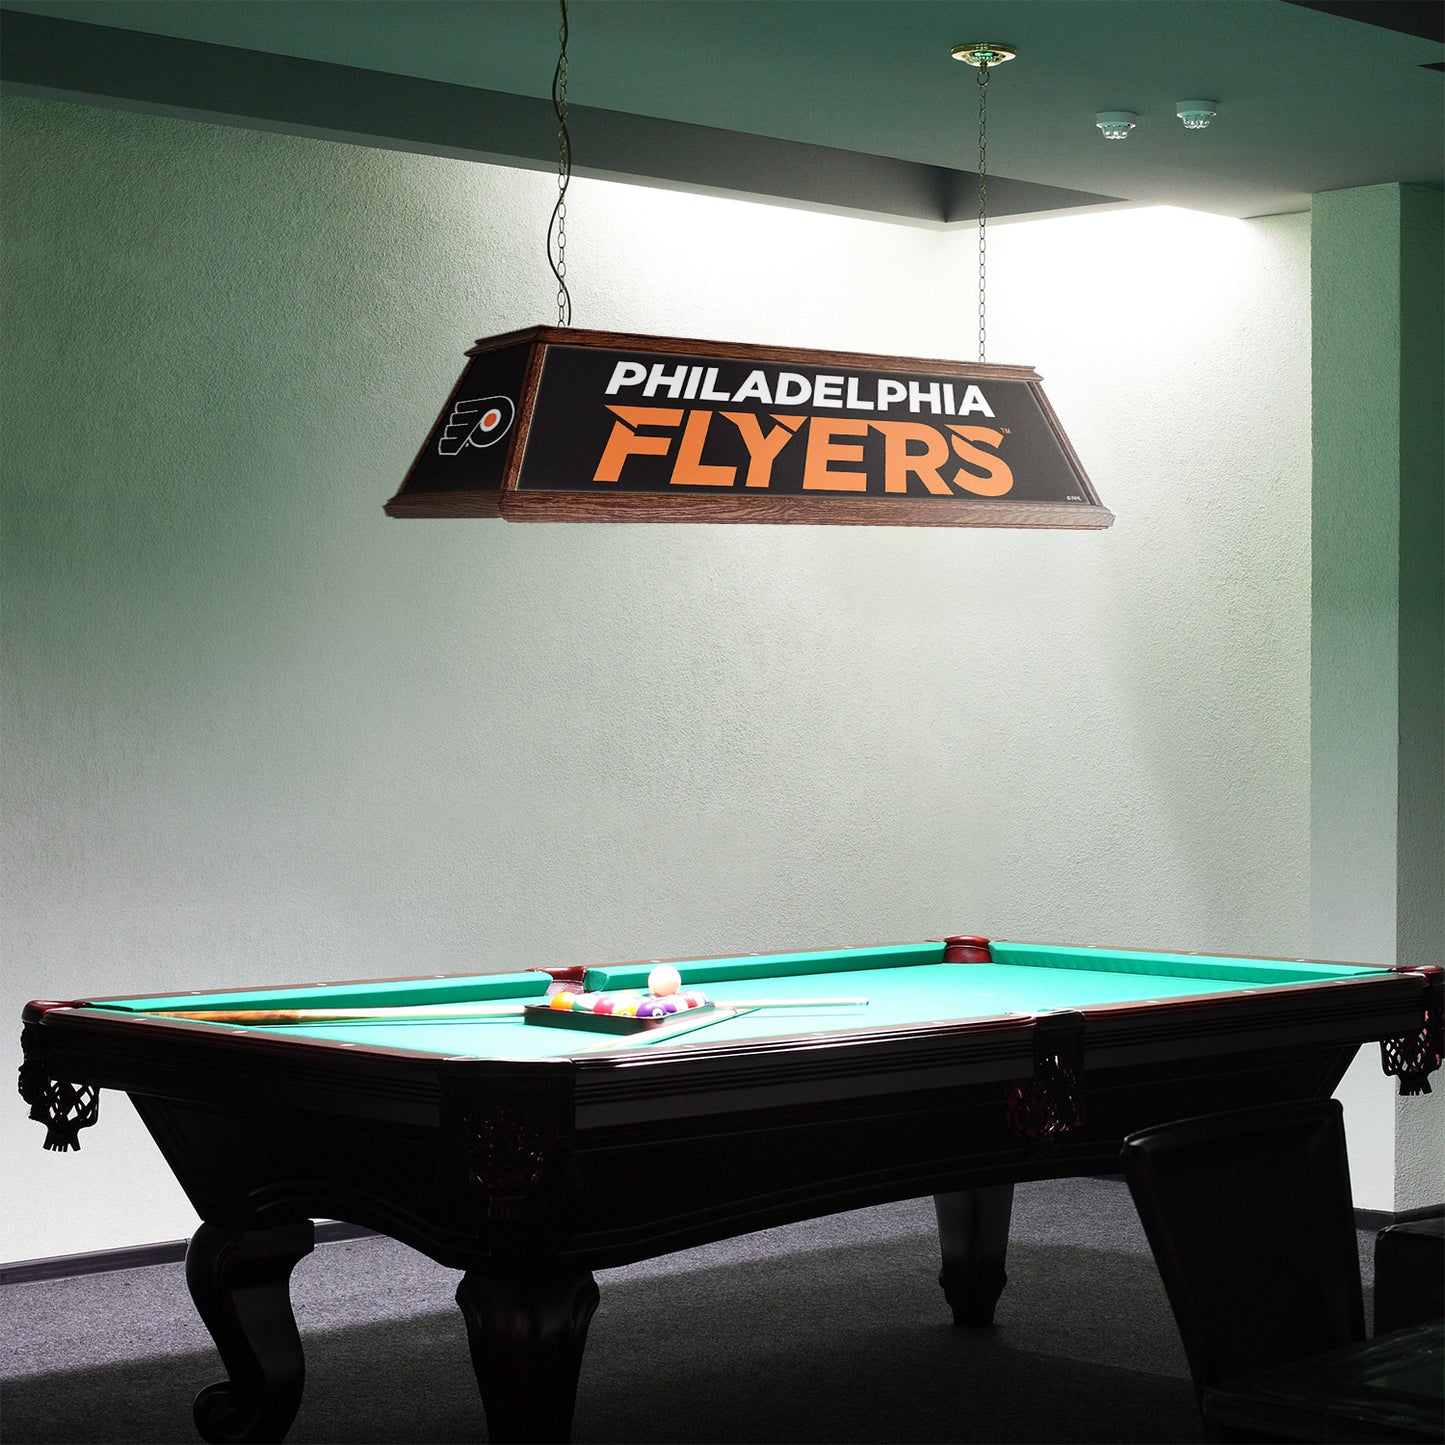 Philadelphia Flyers Premium Pool Table Light Room View